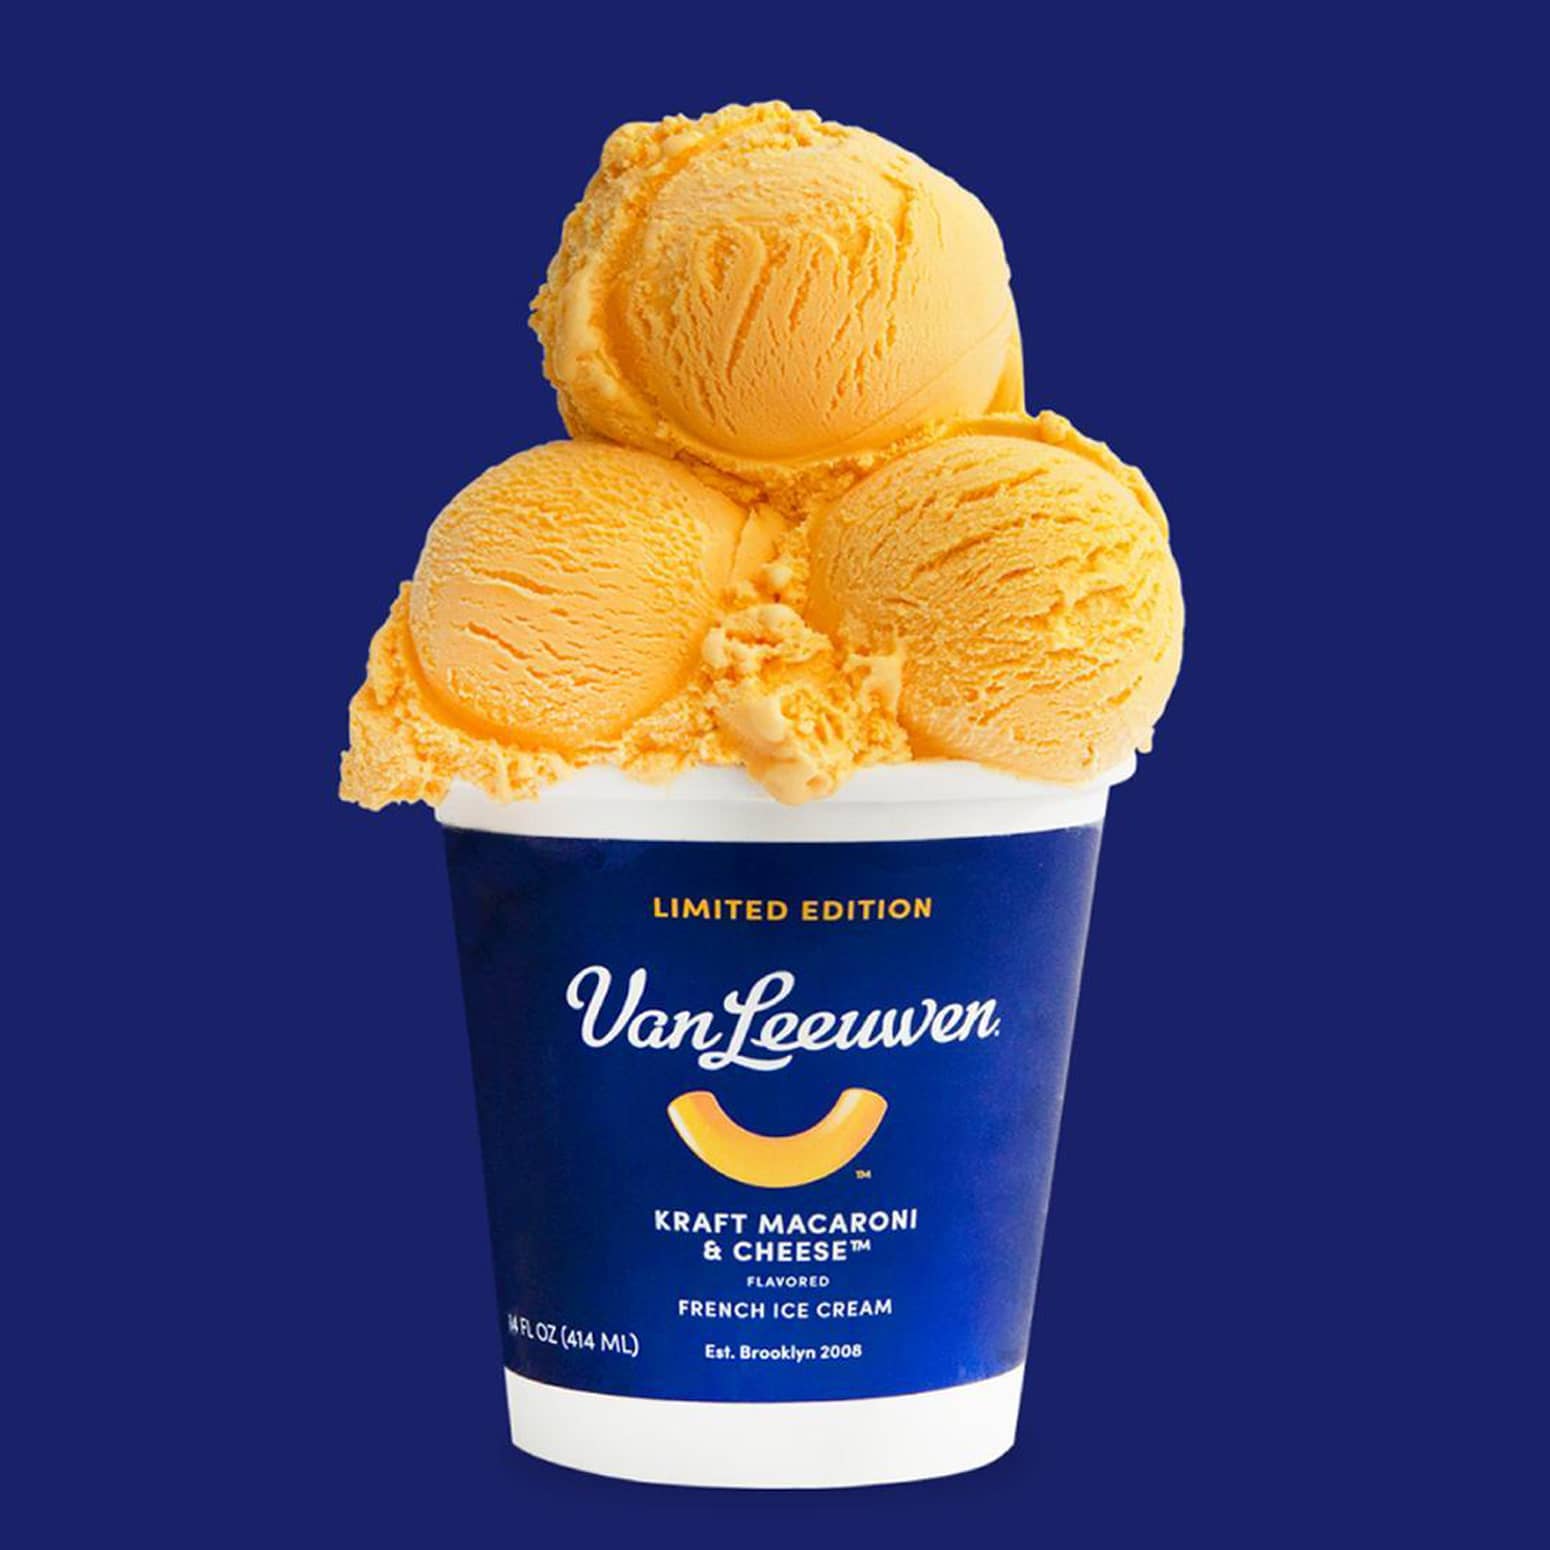 Van Leeuwen Kraft Macaroni and Cheese Ice Cream